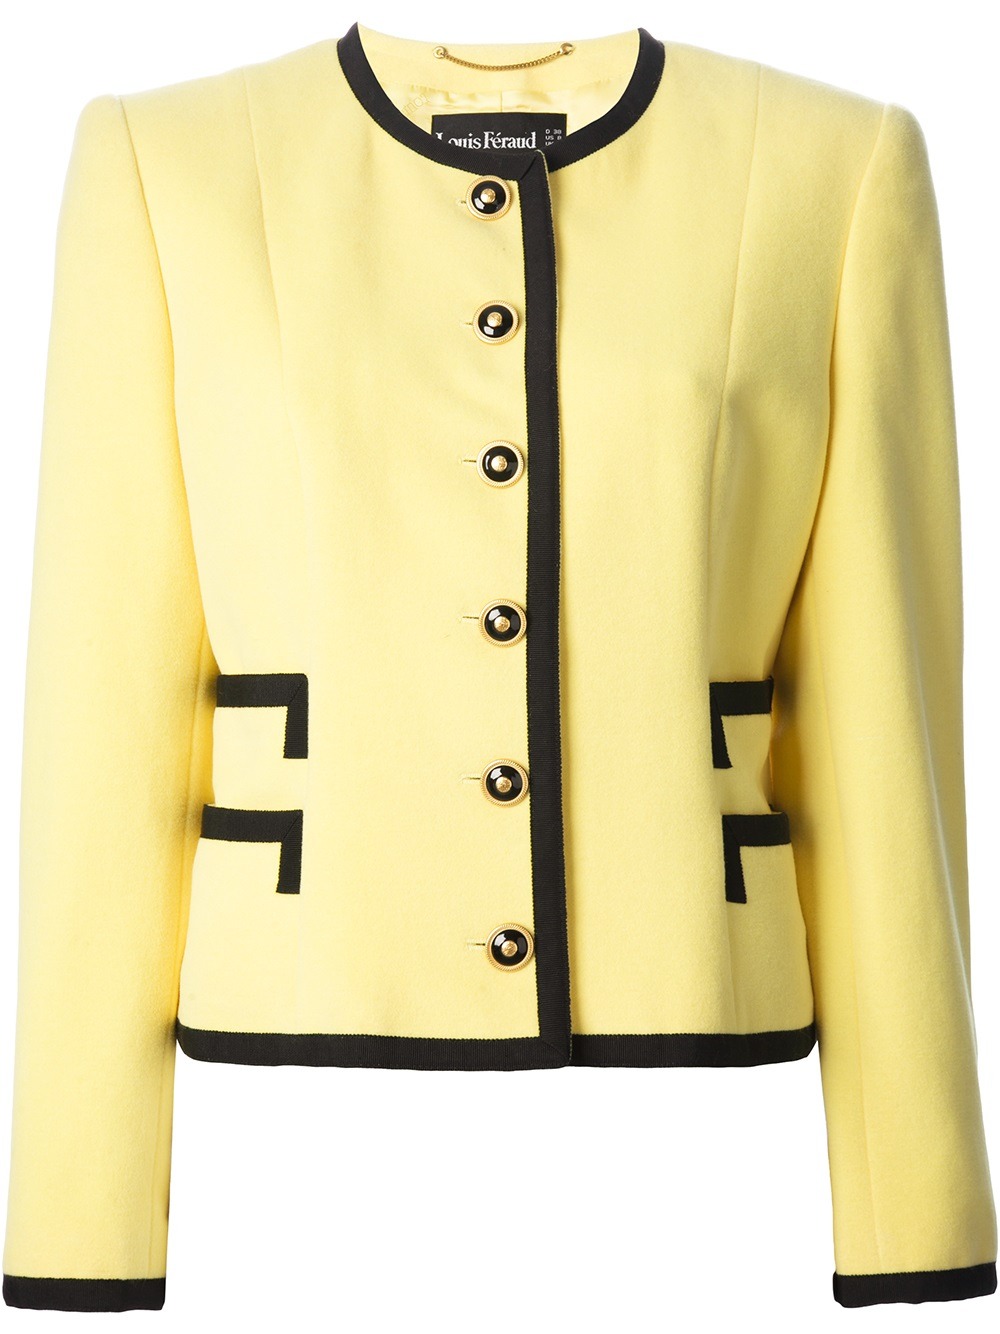 Louis Feraud Vintage Bicolour Jacket in Yellow (yellow & orange) | Lyst